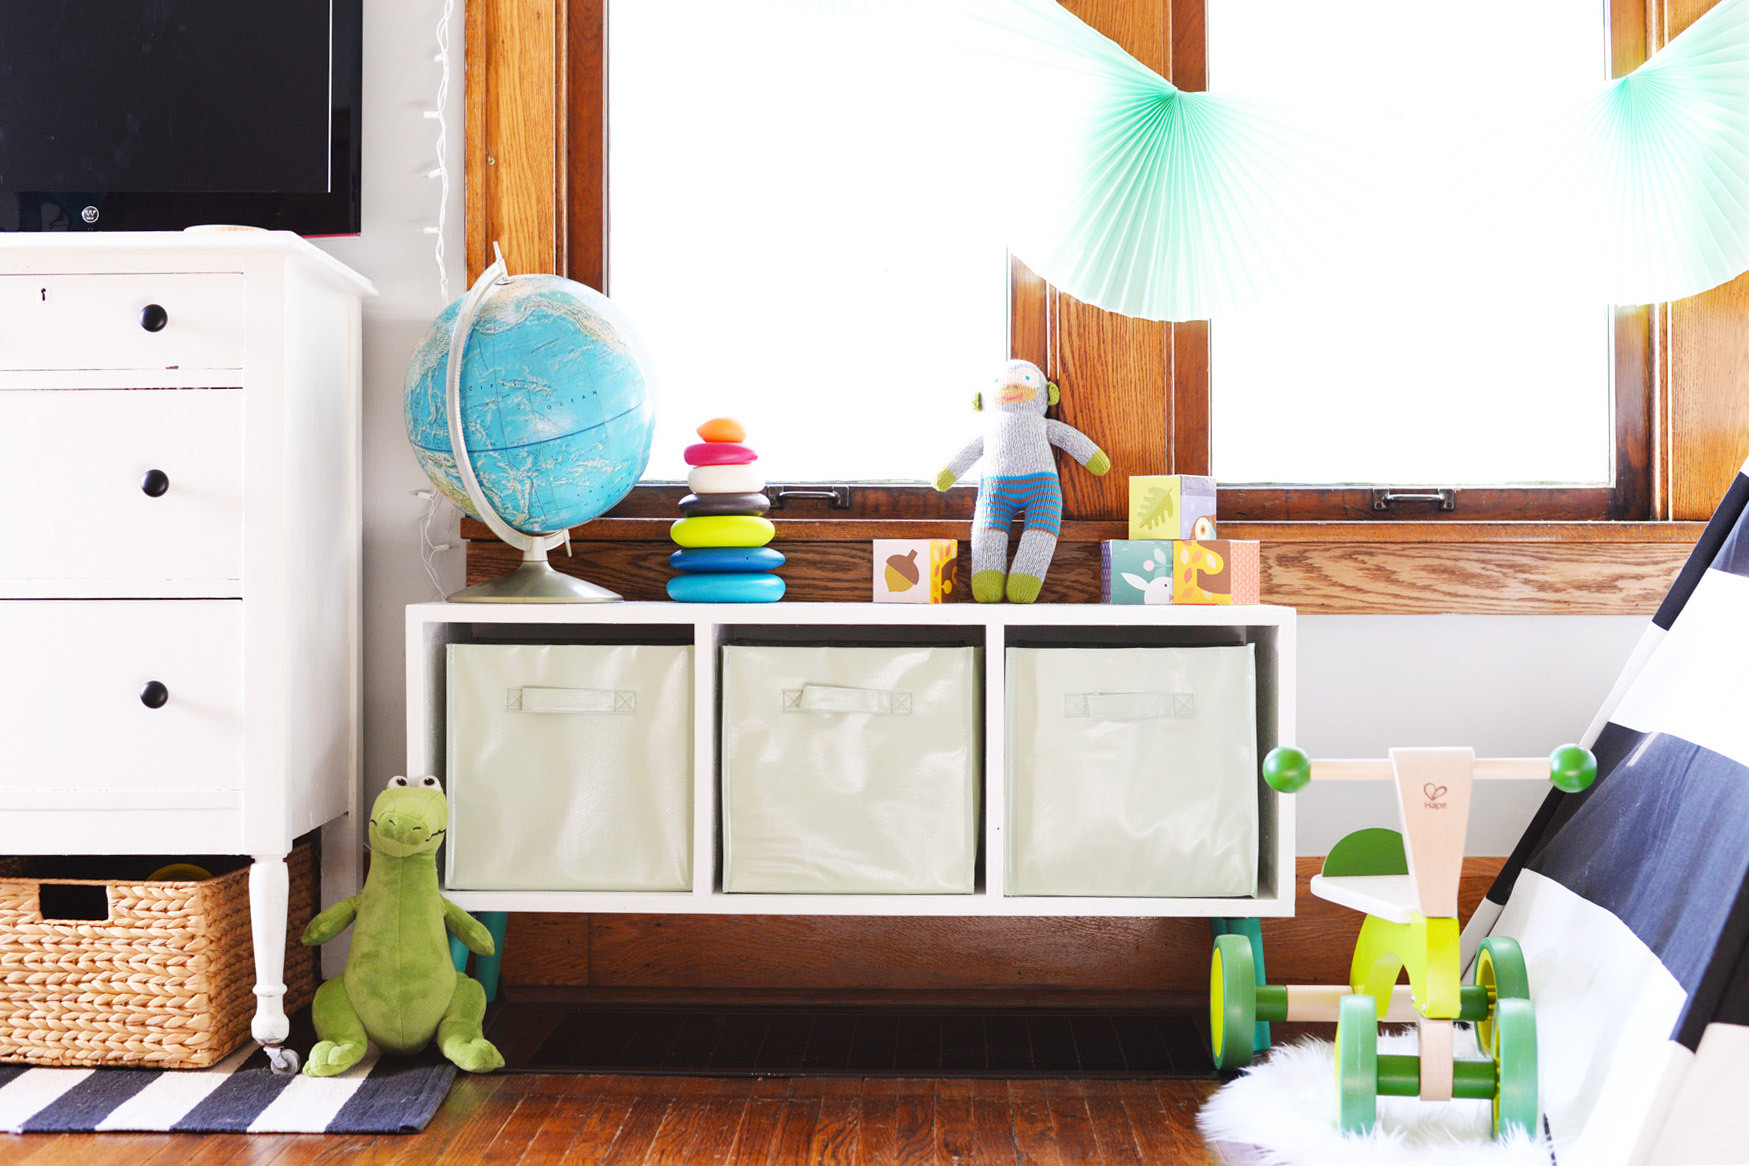 Best ideas about DIY Kids Bedroom
. Save or Pin 10 DIY Kids’ Storage Ideas Now.